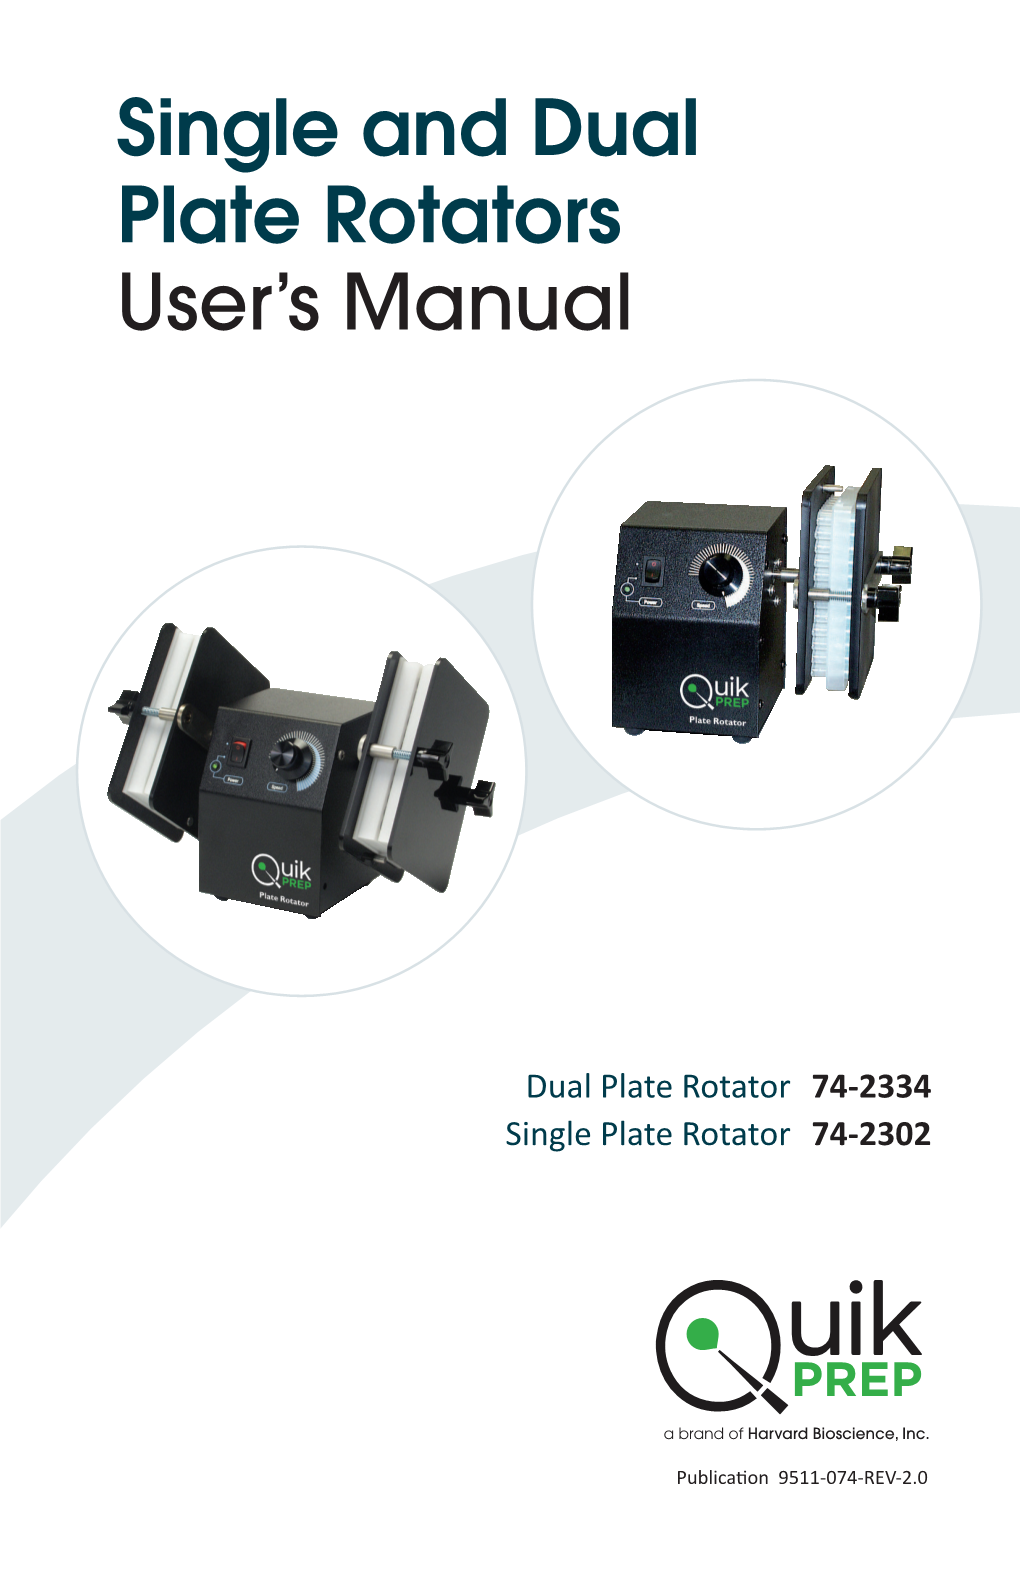 Single and Dual Plate Rotators User's Manual